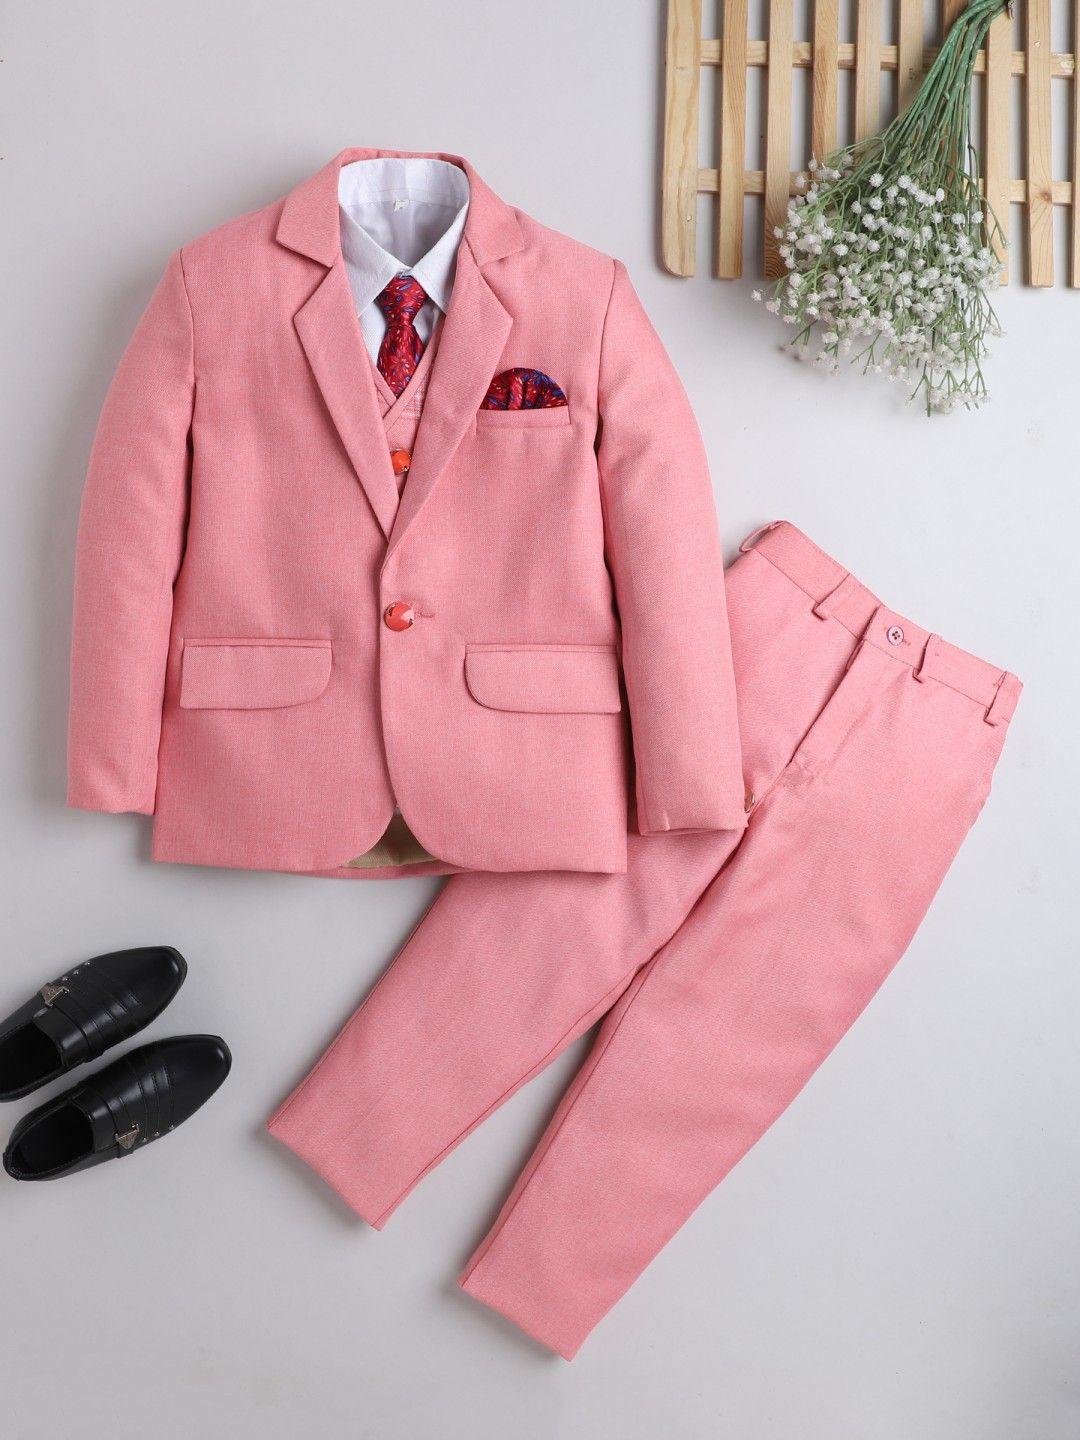 dkgf fashion pink solid 5-piece party suit